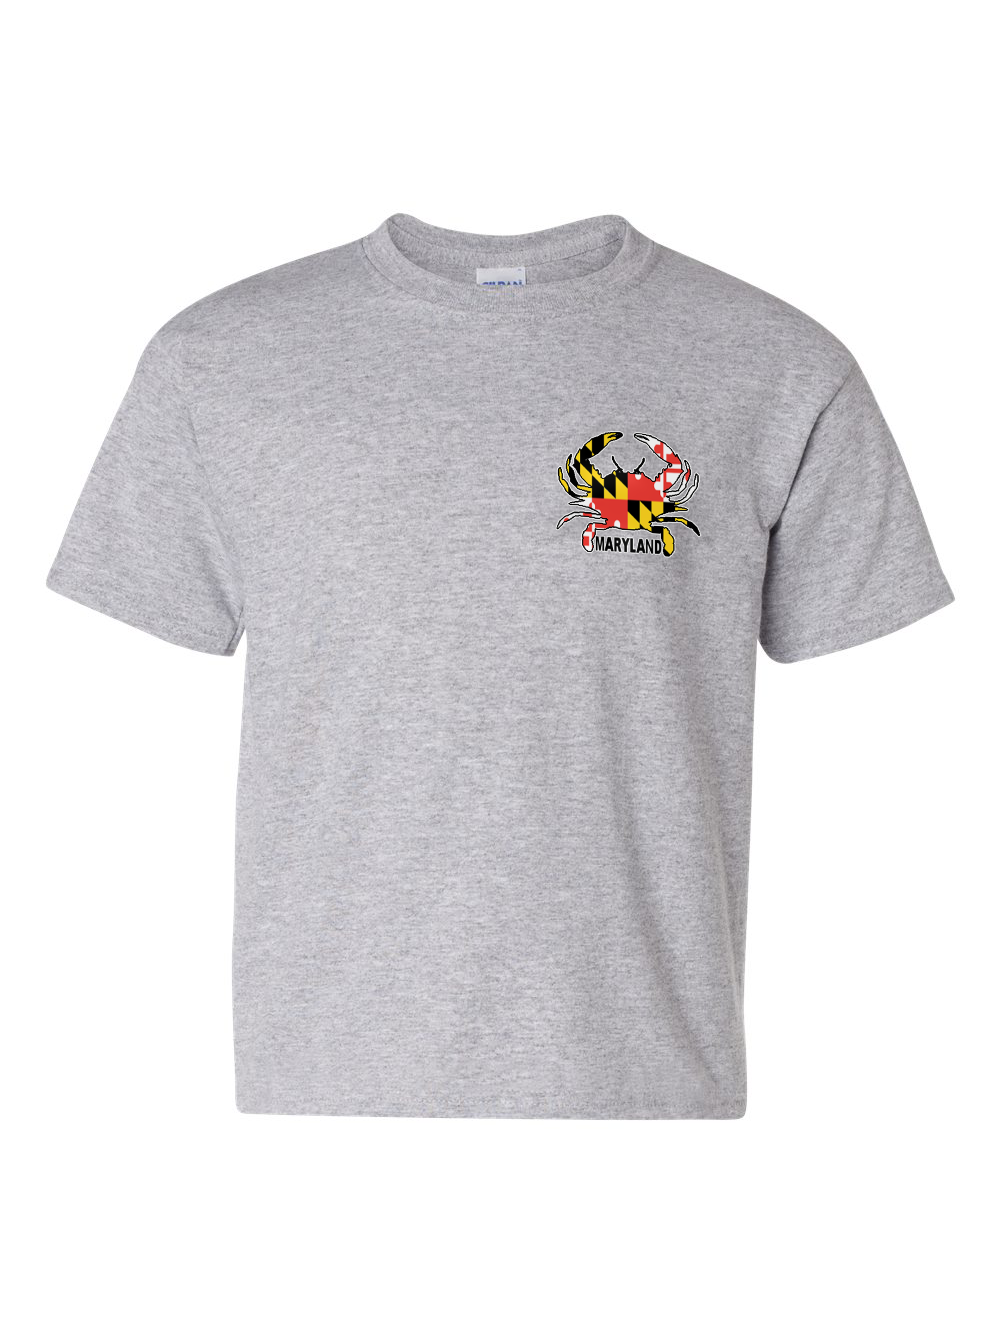 Maryland Gifts Small Crab Maryland Flag Youth T-Shirt (Grey)